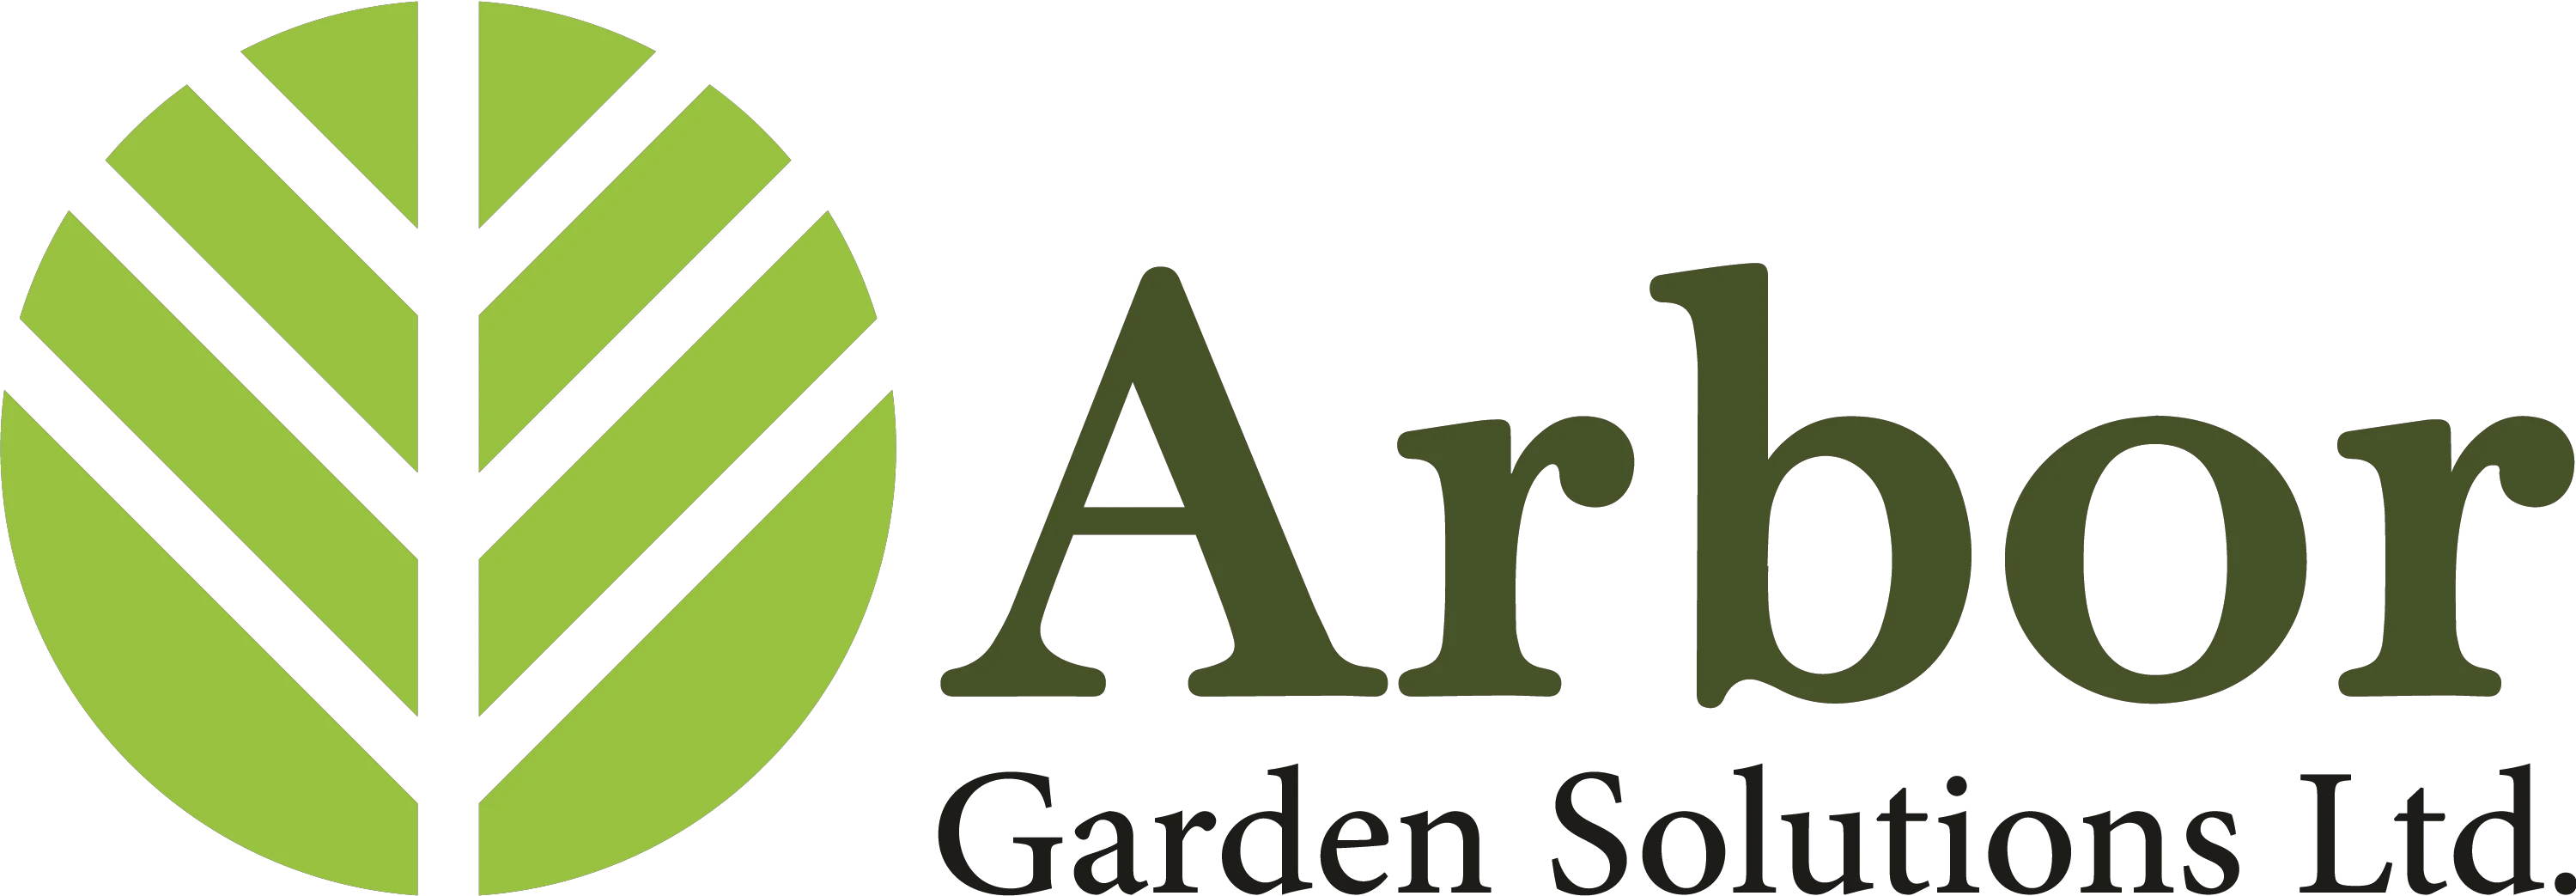 Arbor Garden Solutions Coupons 